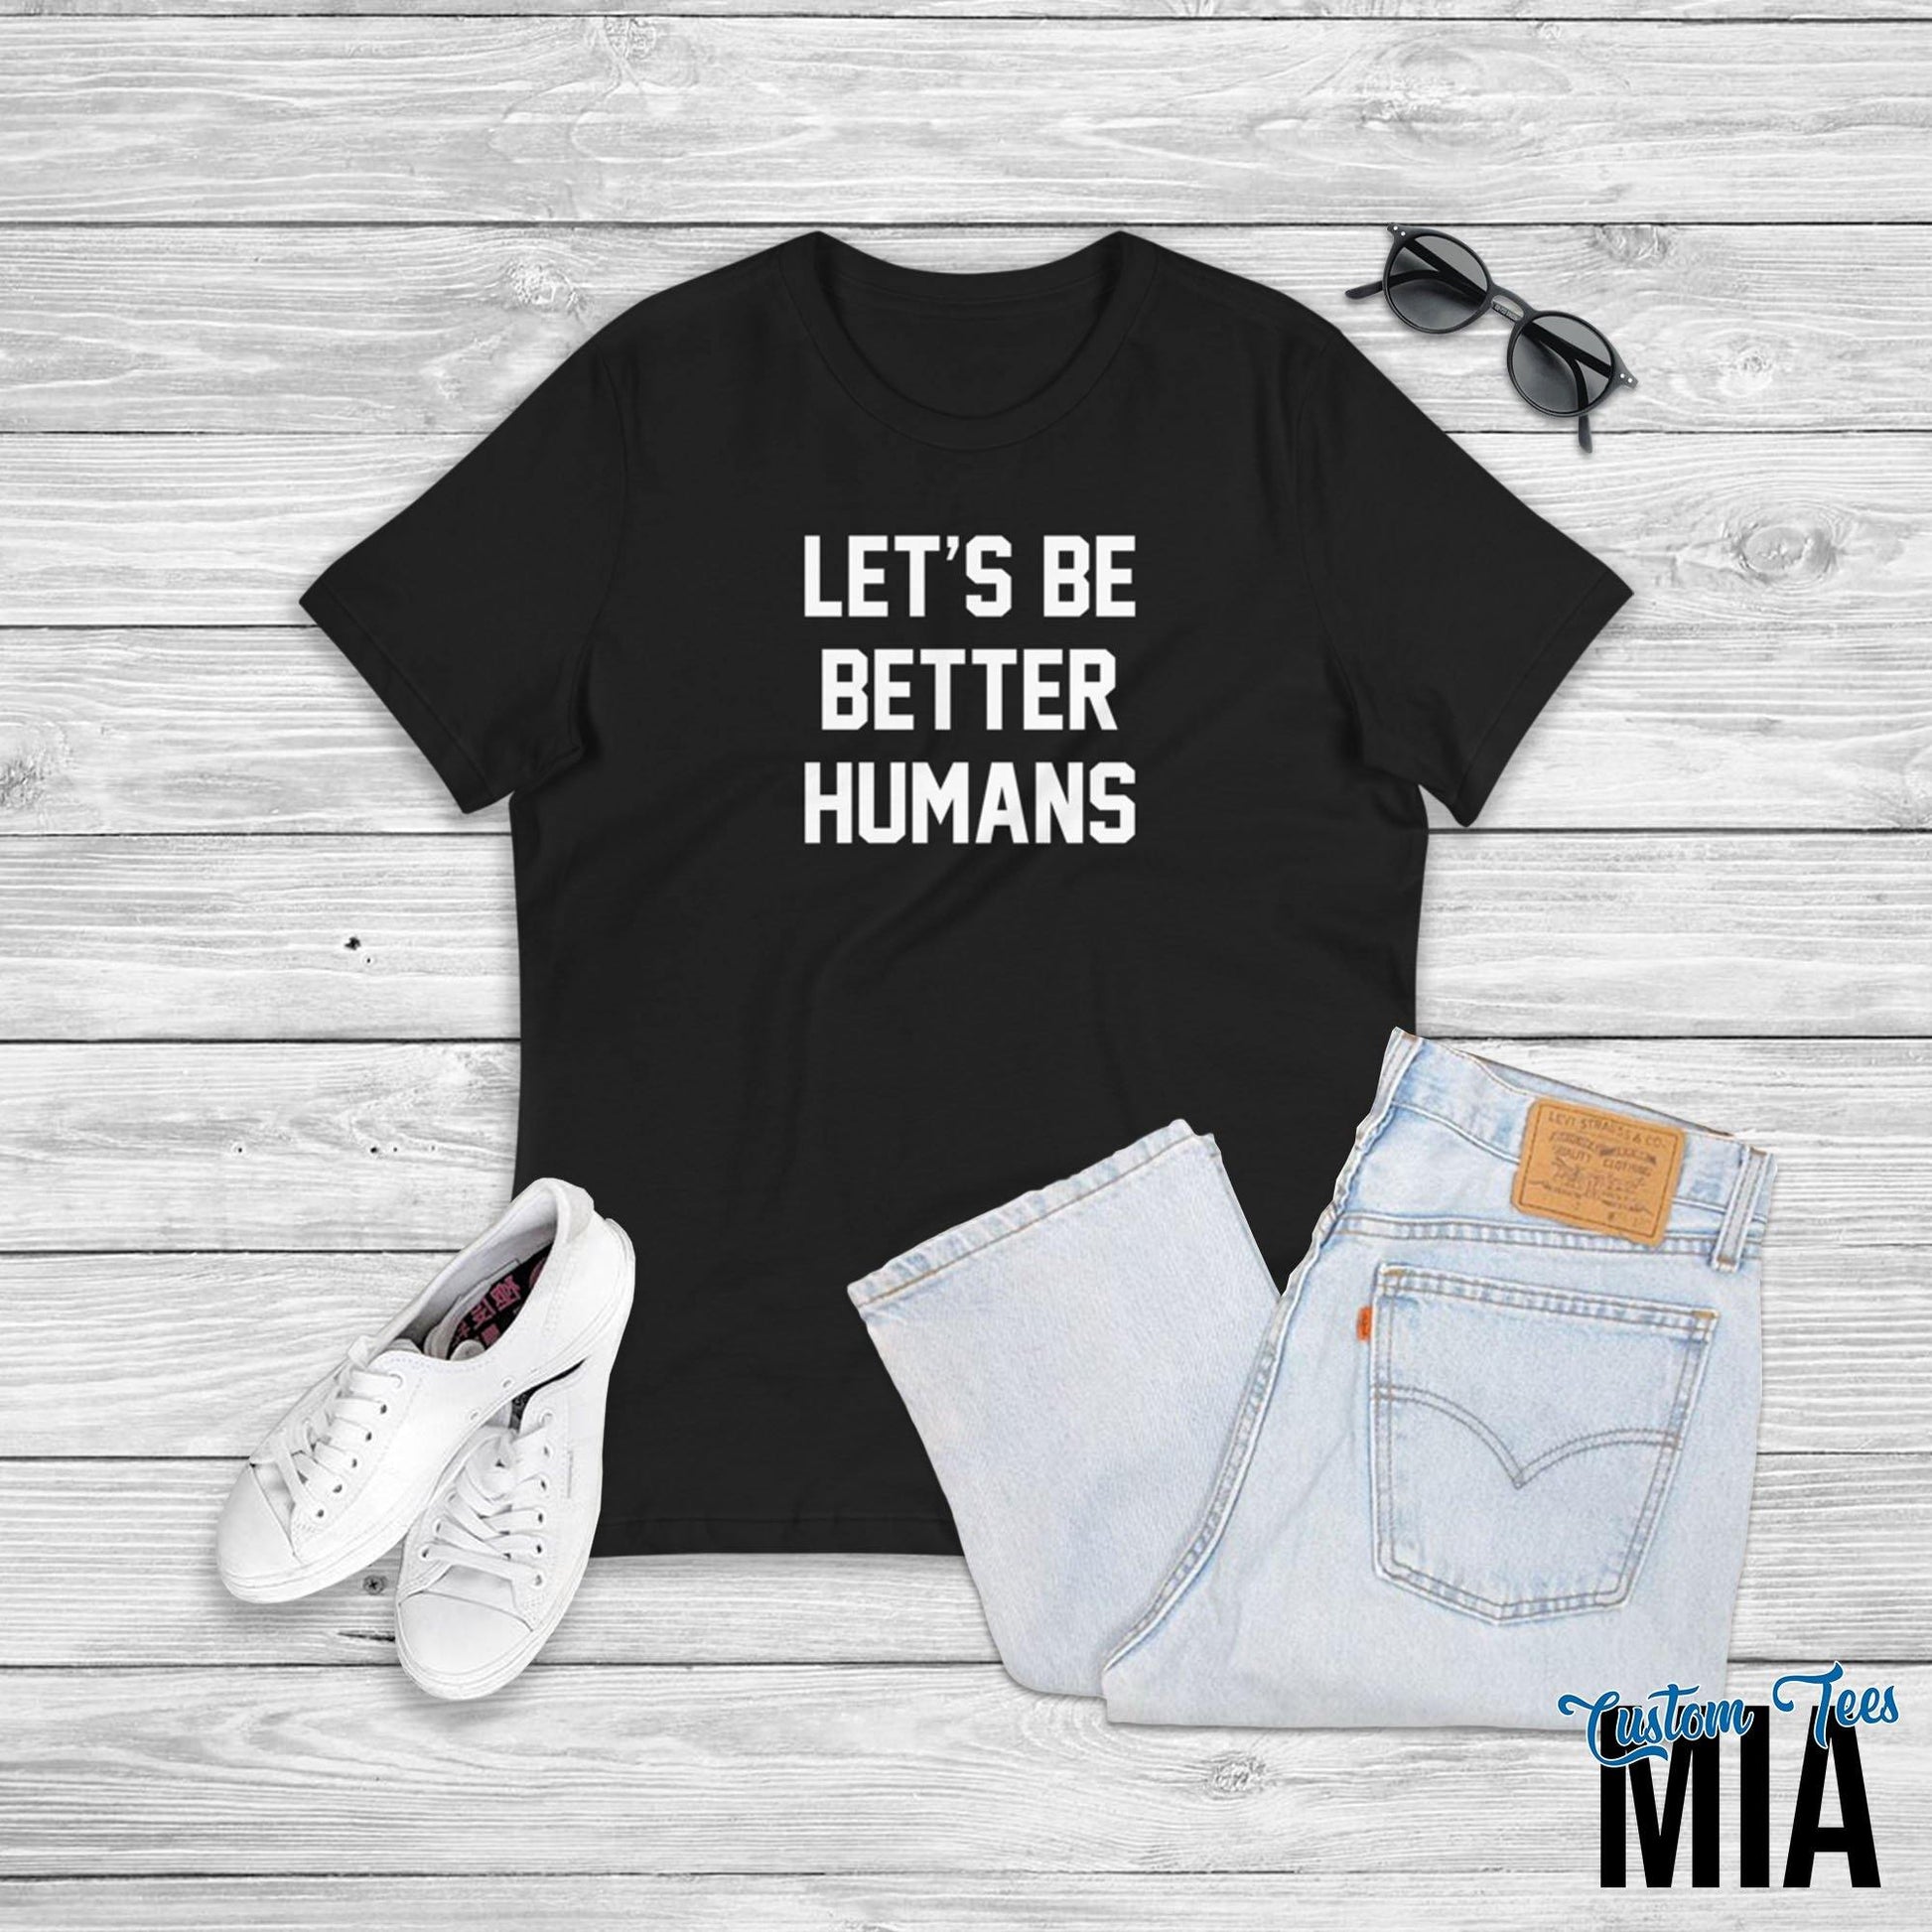 Let's Be Better Humans Shirt - Custom Tees MIA